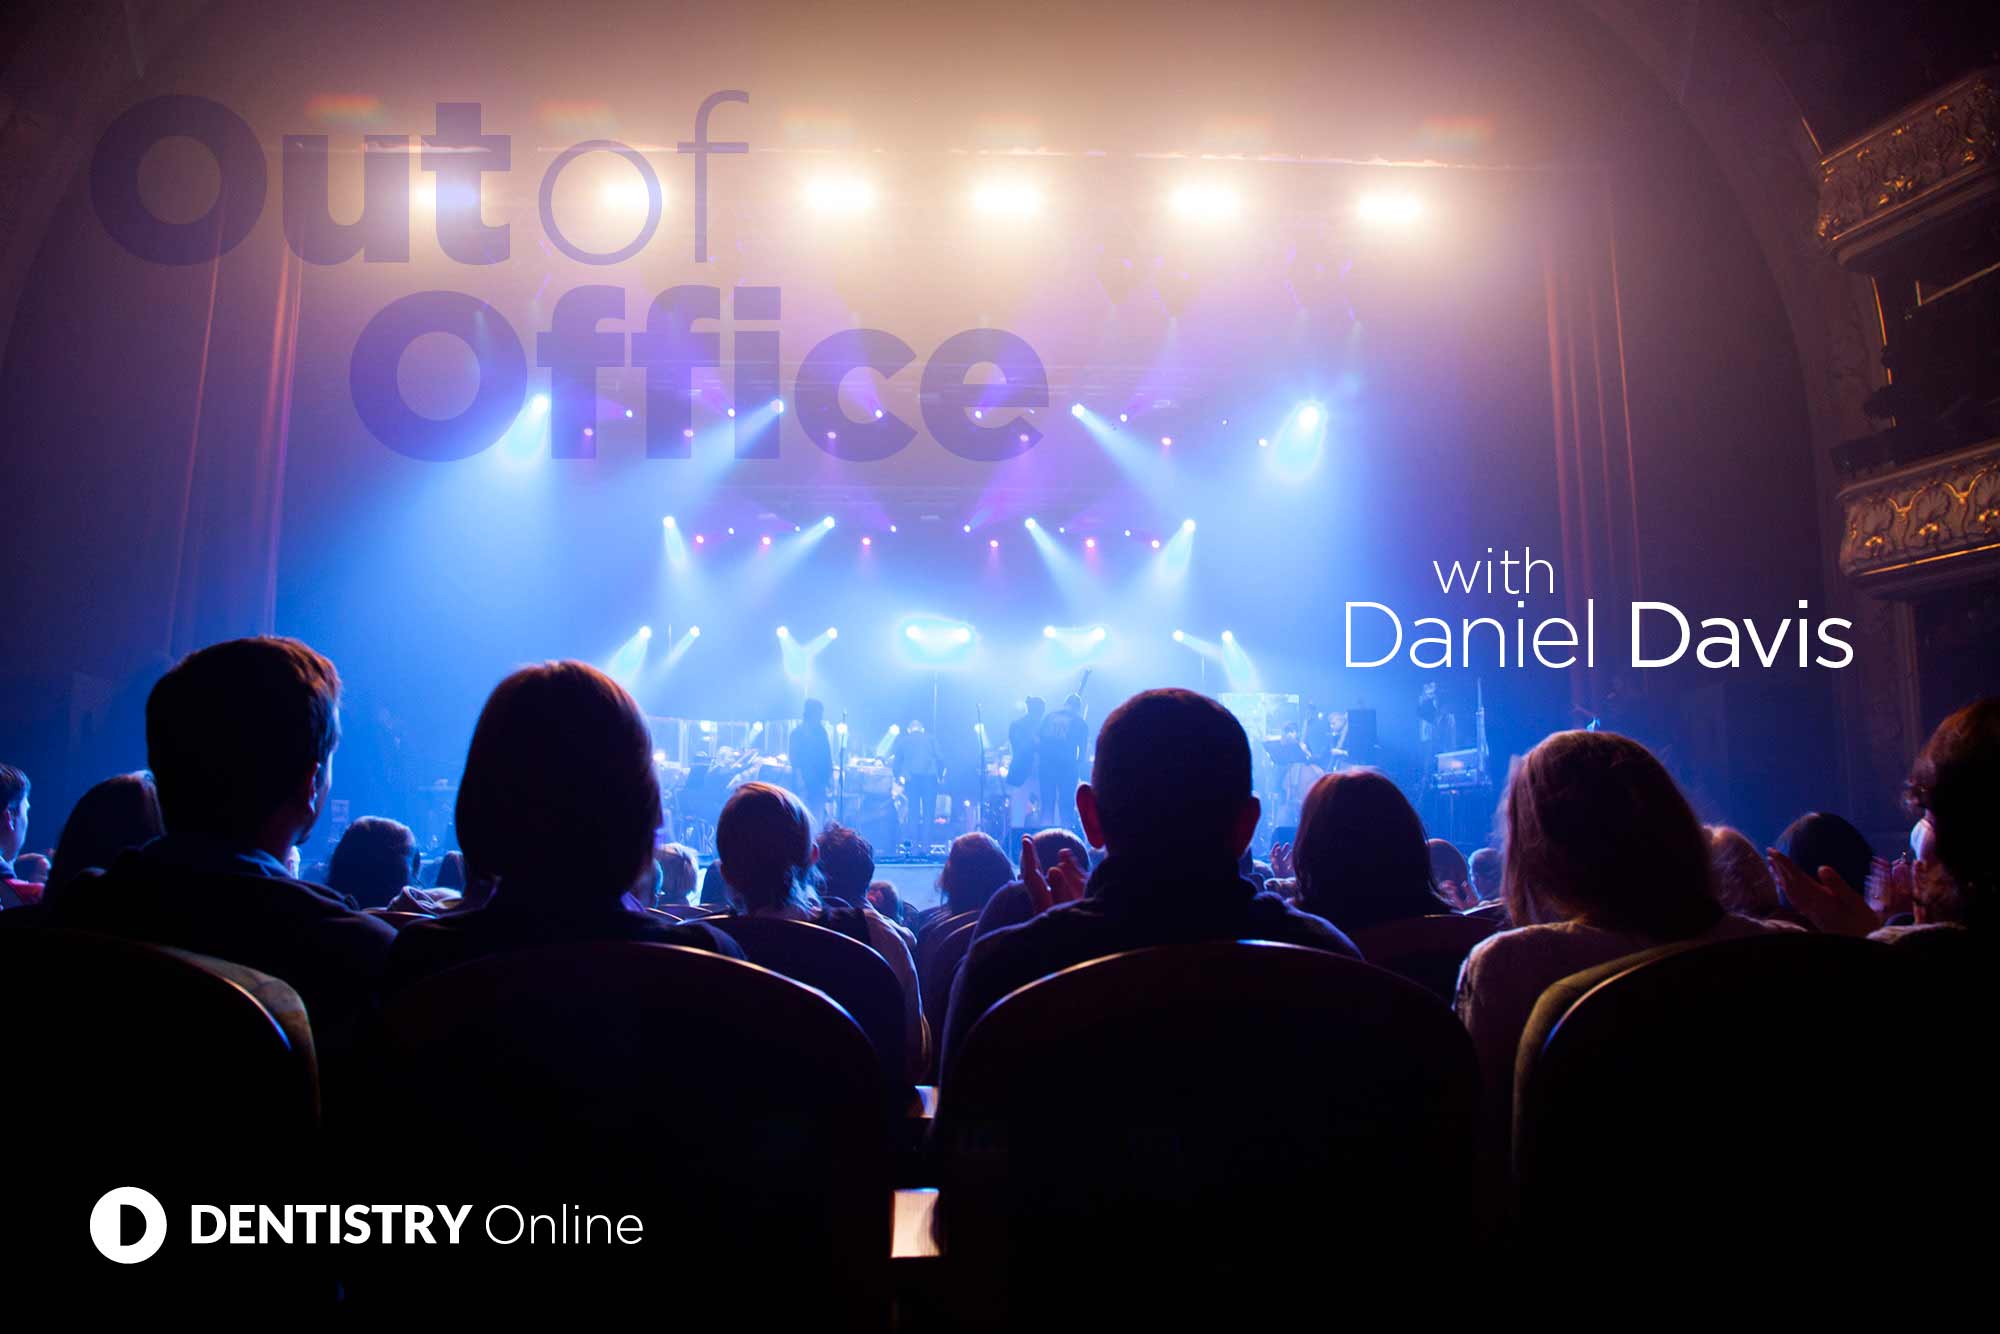 Daniel Davis on musical theatre